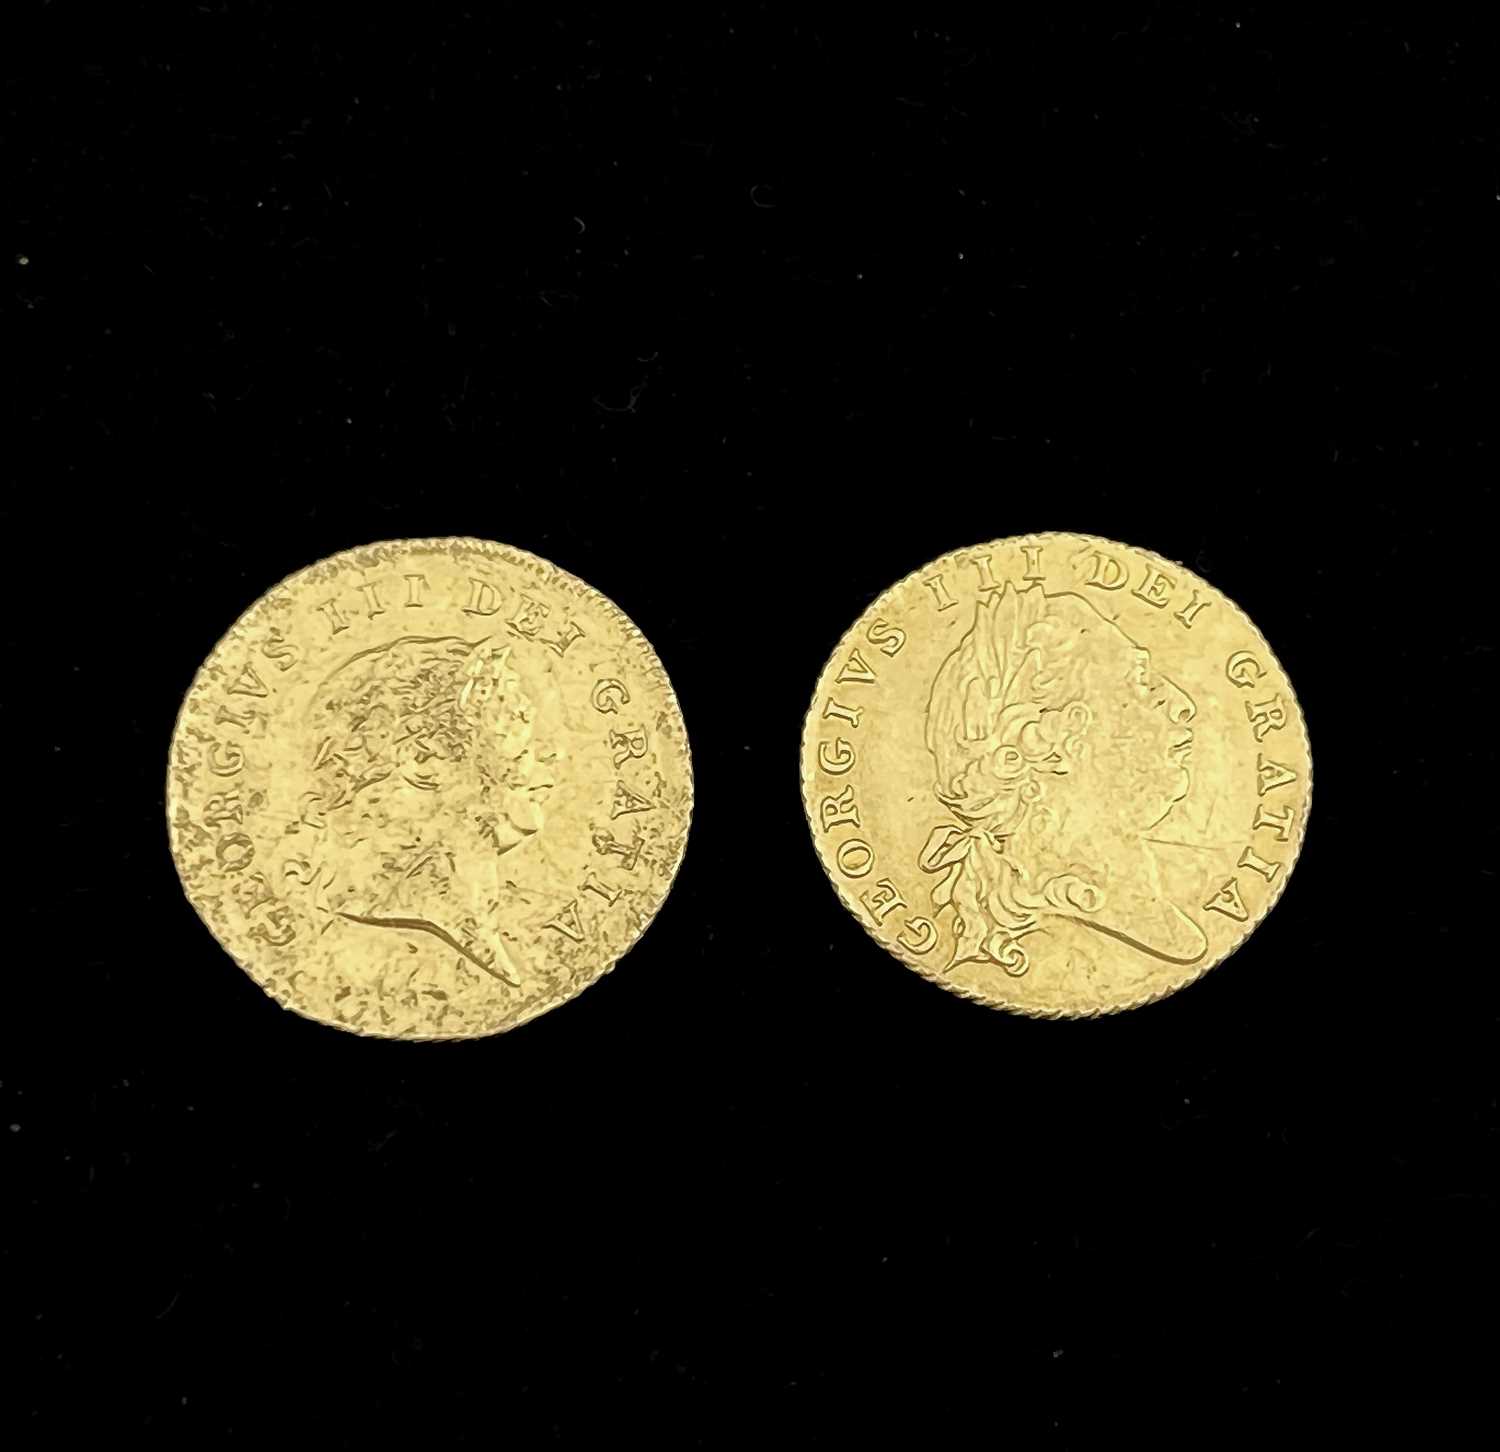 Guinea, George III half guineas, 1801 and 1804 (2)